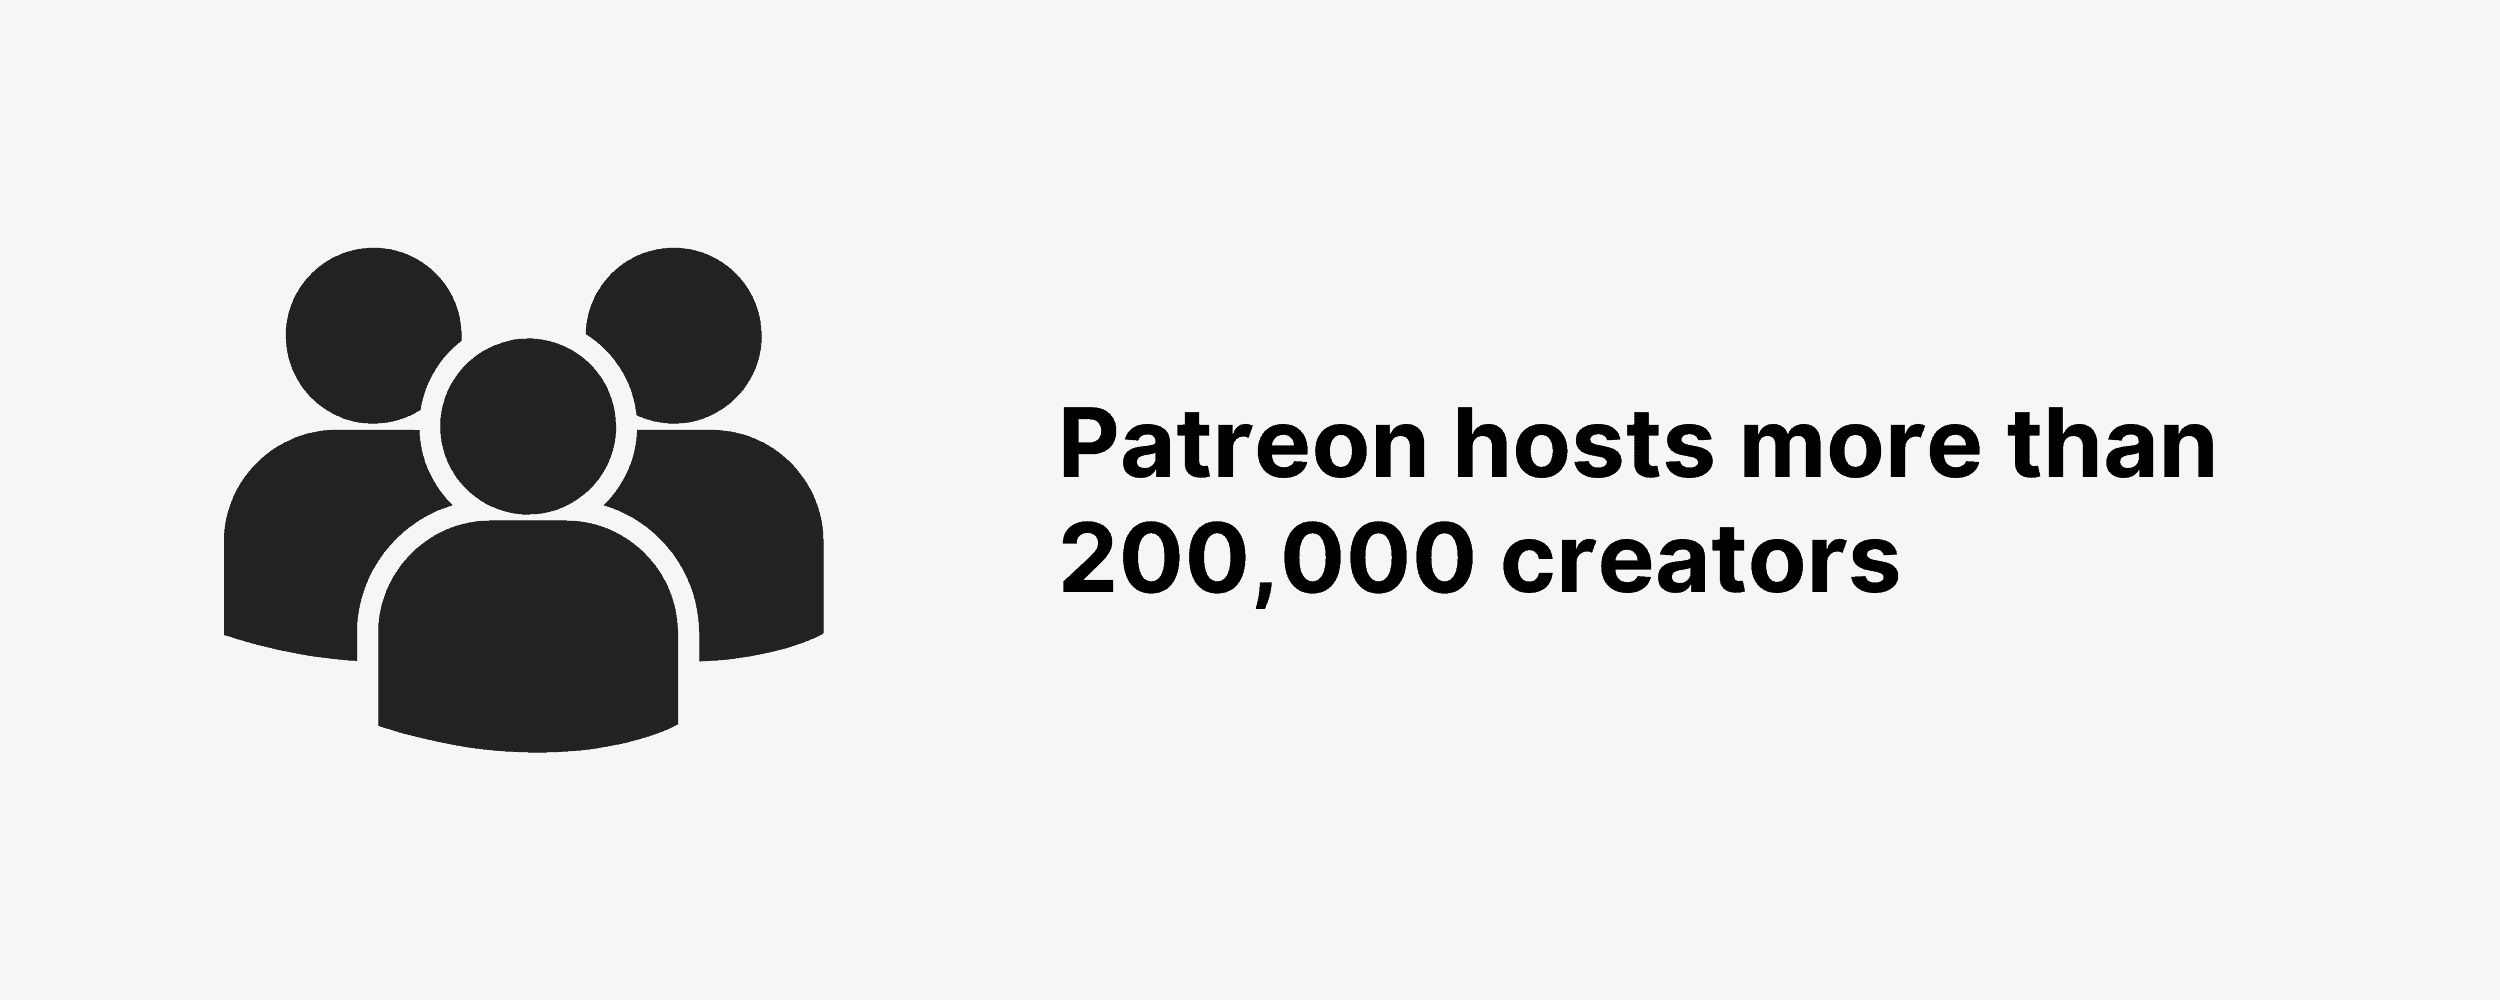 Patreon hosts more than 200,000 creators